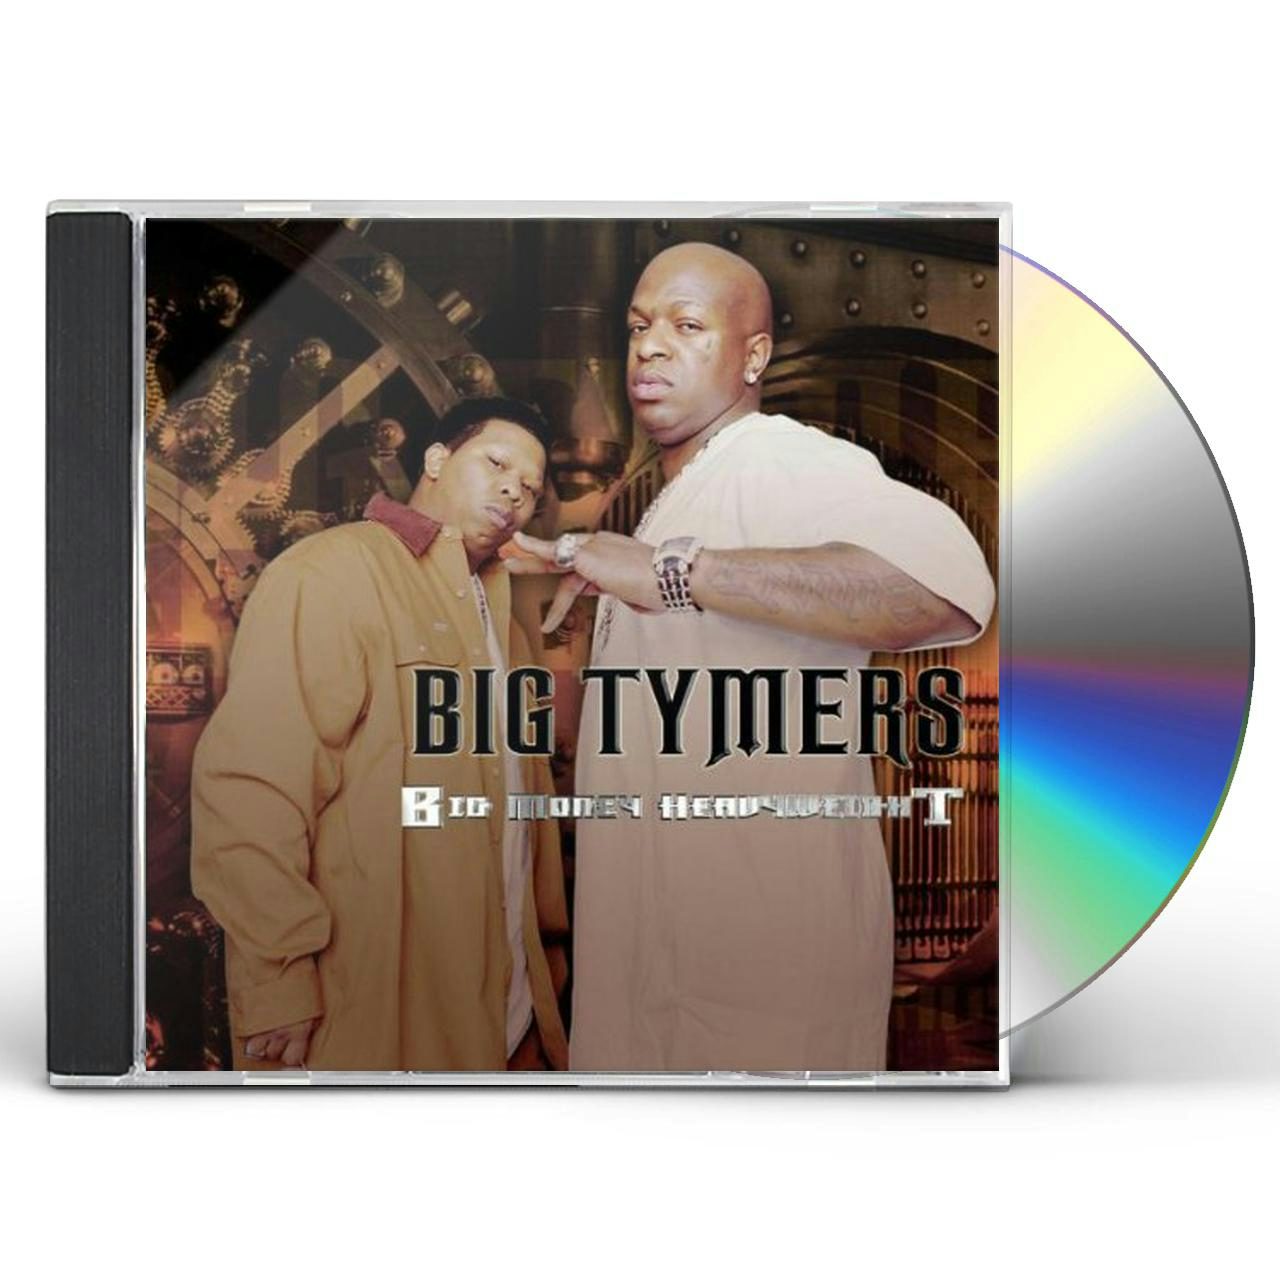 Big Tymers Store: Official Merch & Vinyl